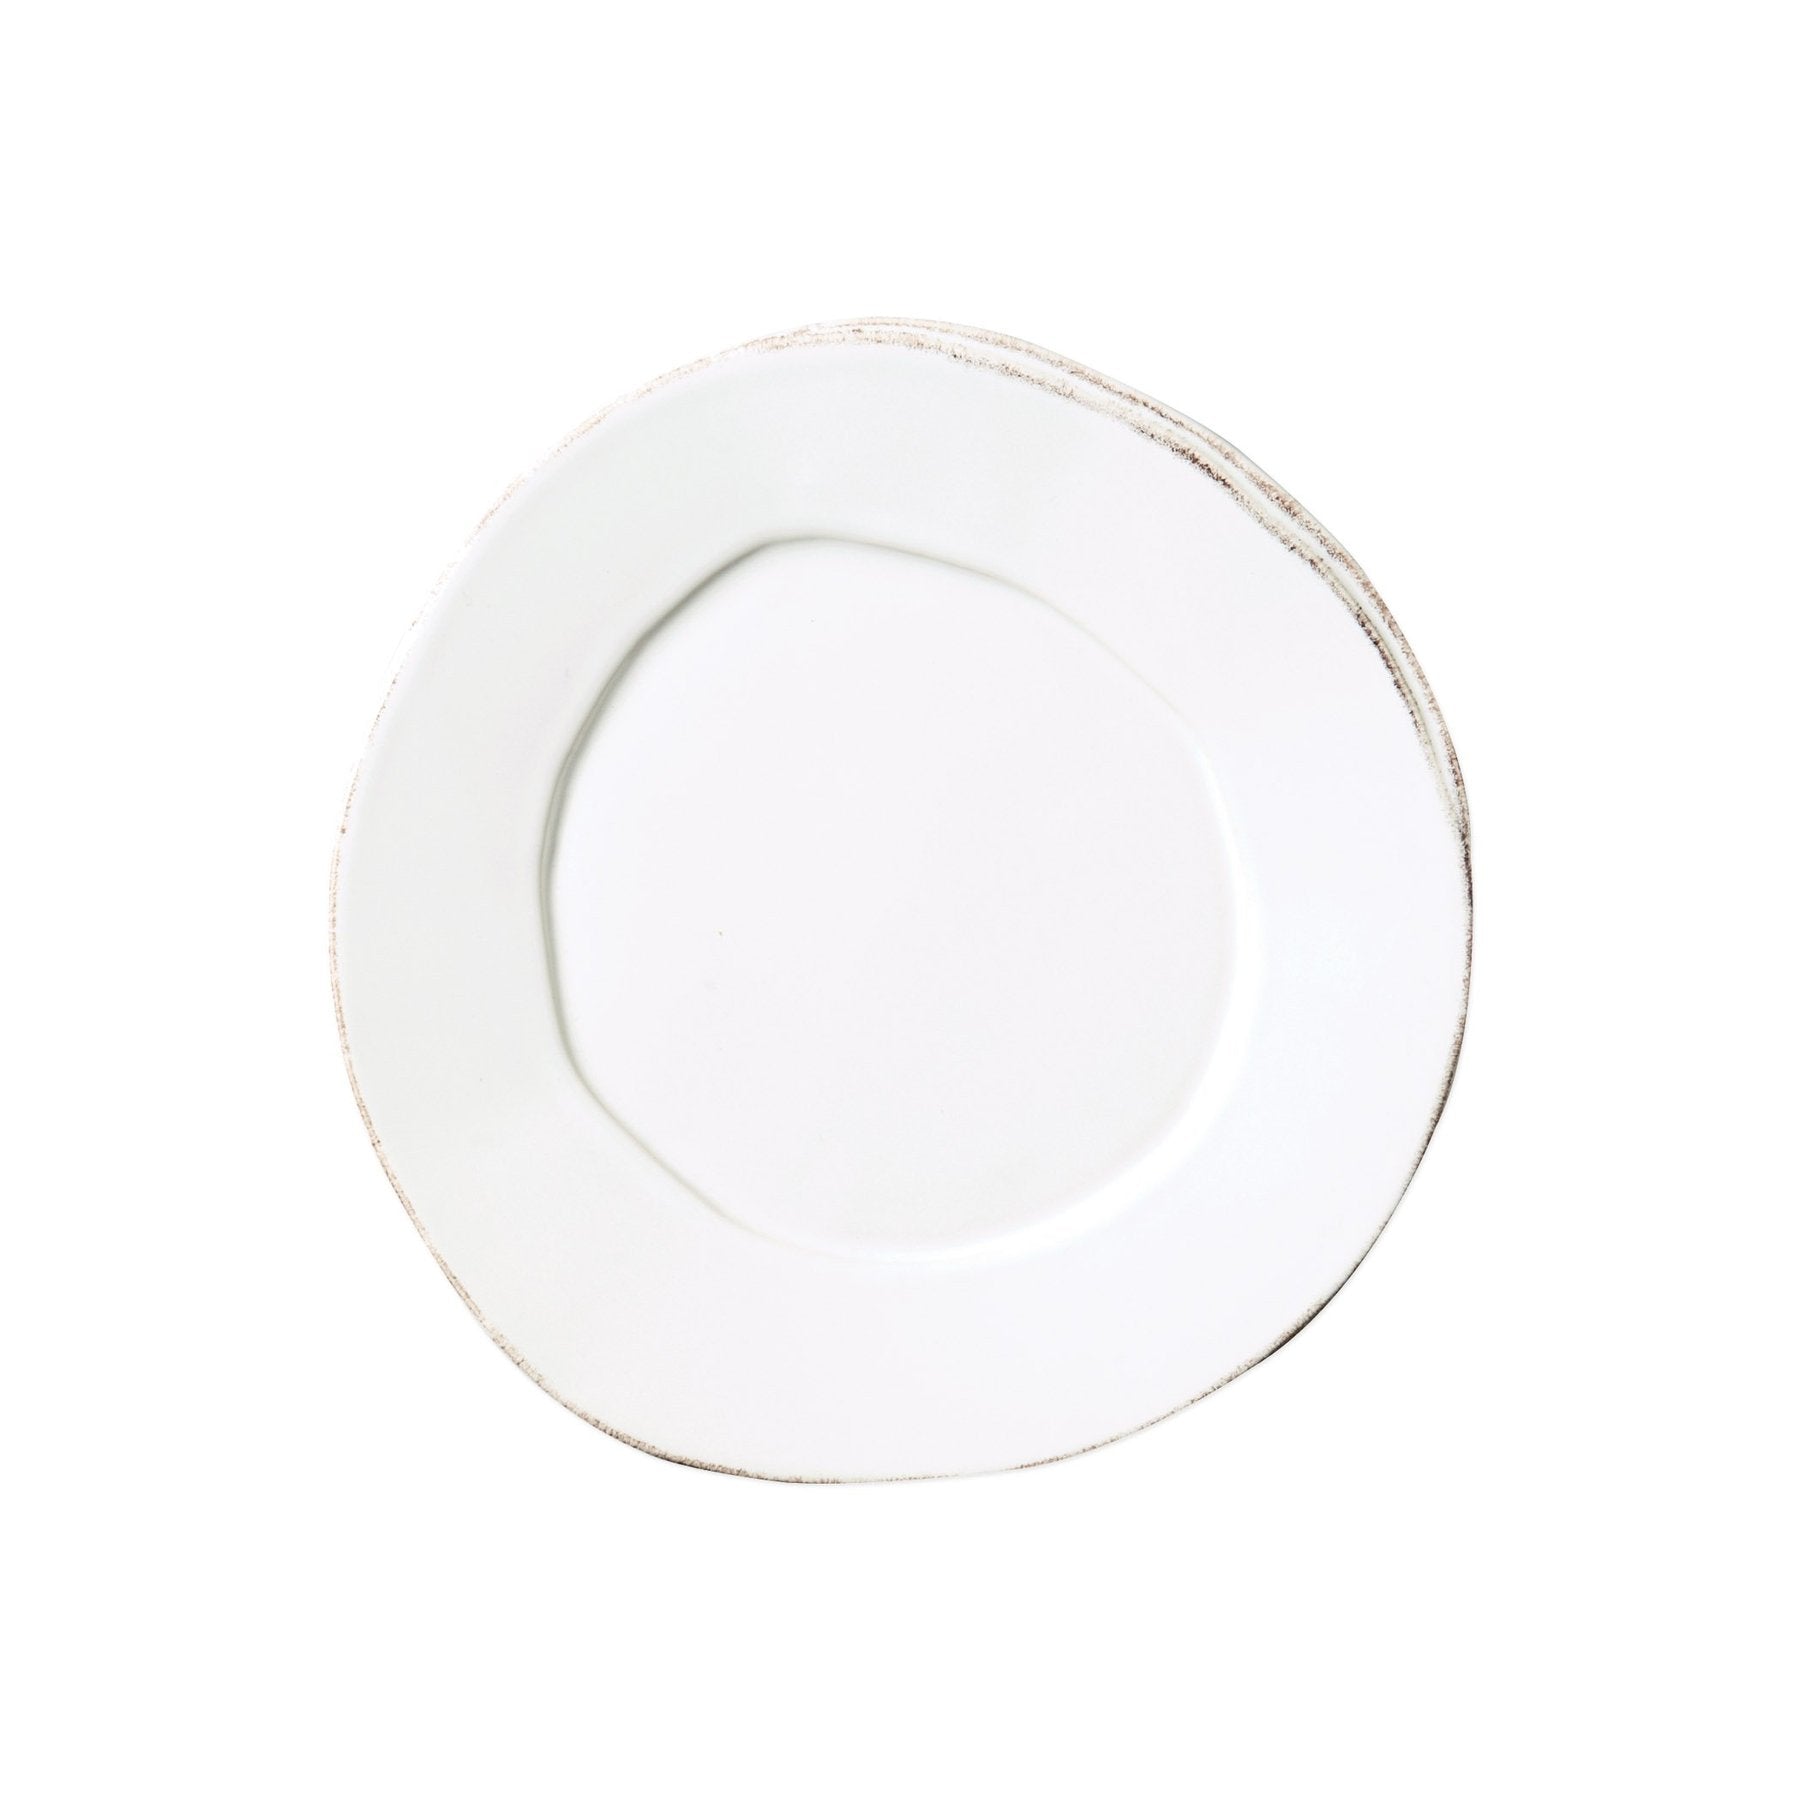 Vietri - Lastra Salad Plate - White